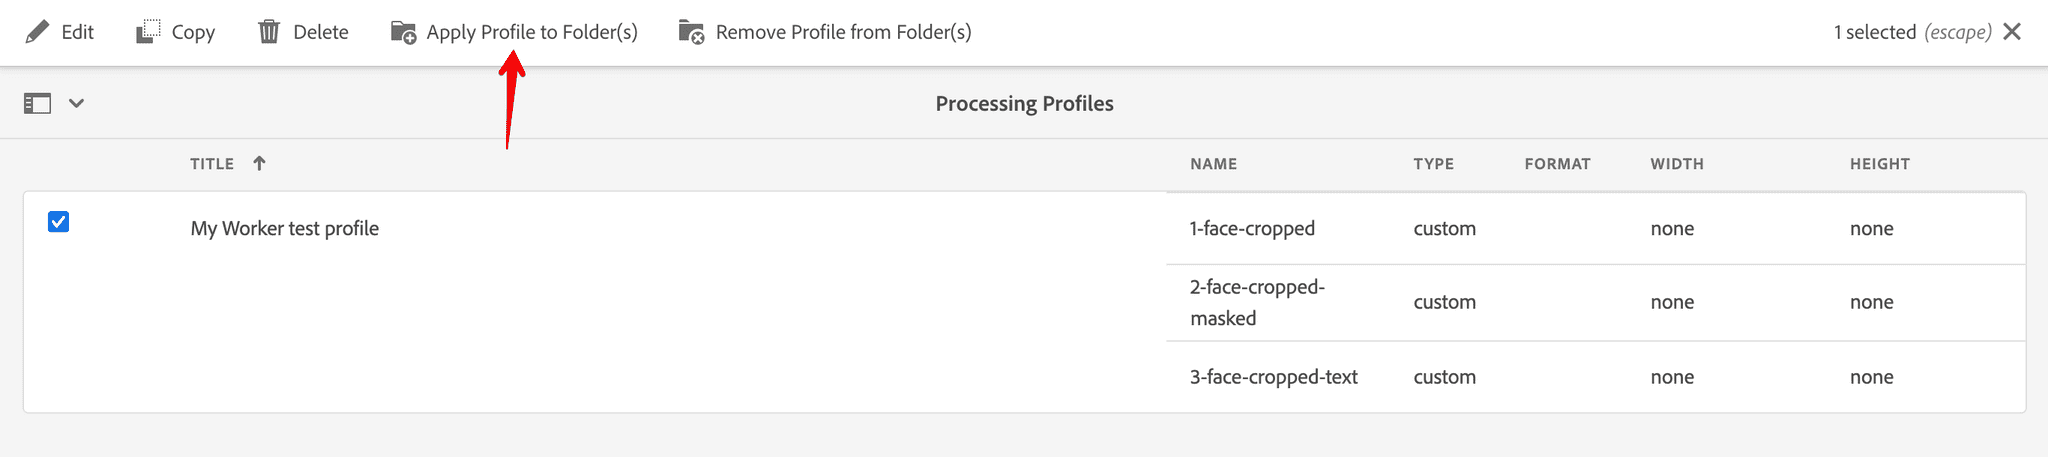 Apply Profile to Folder